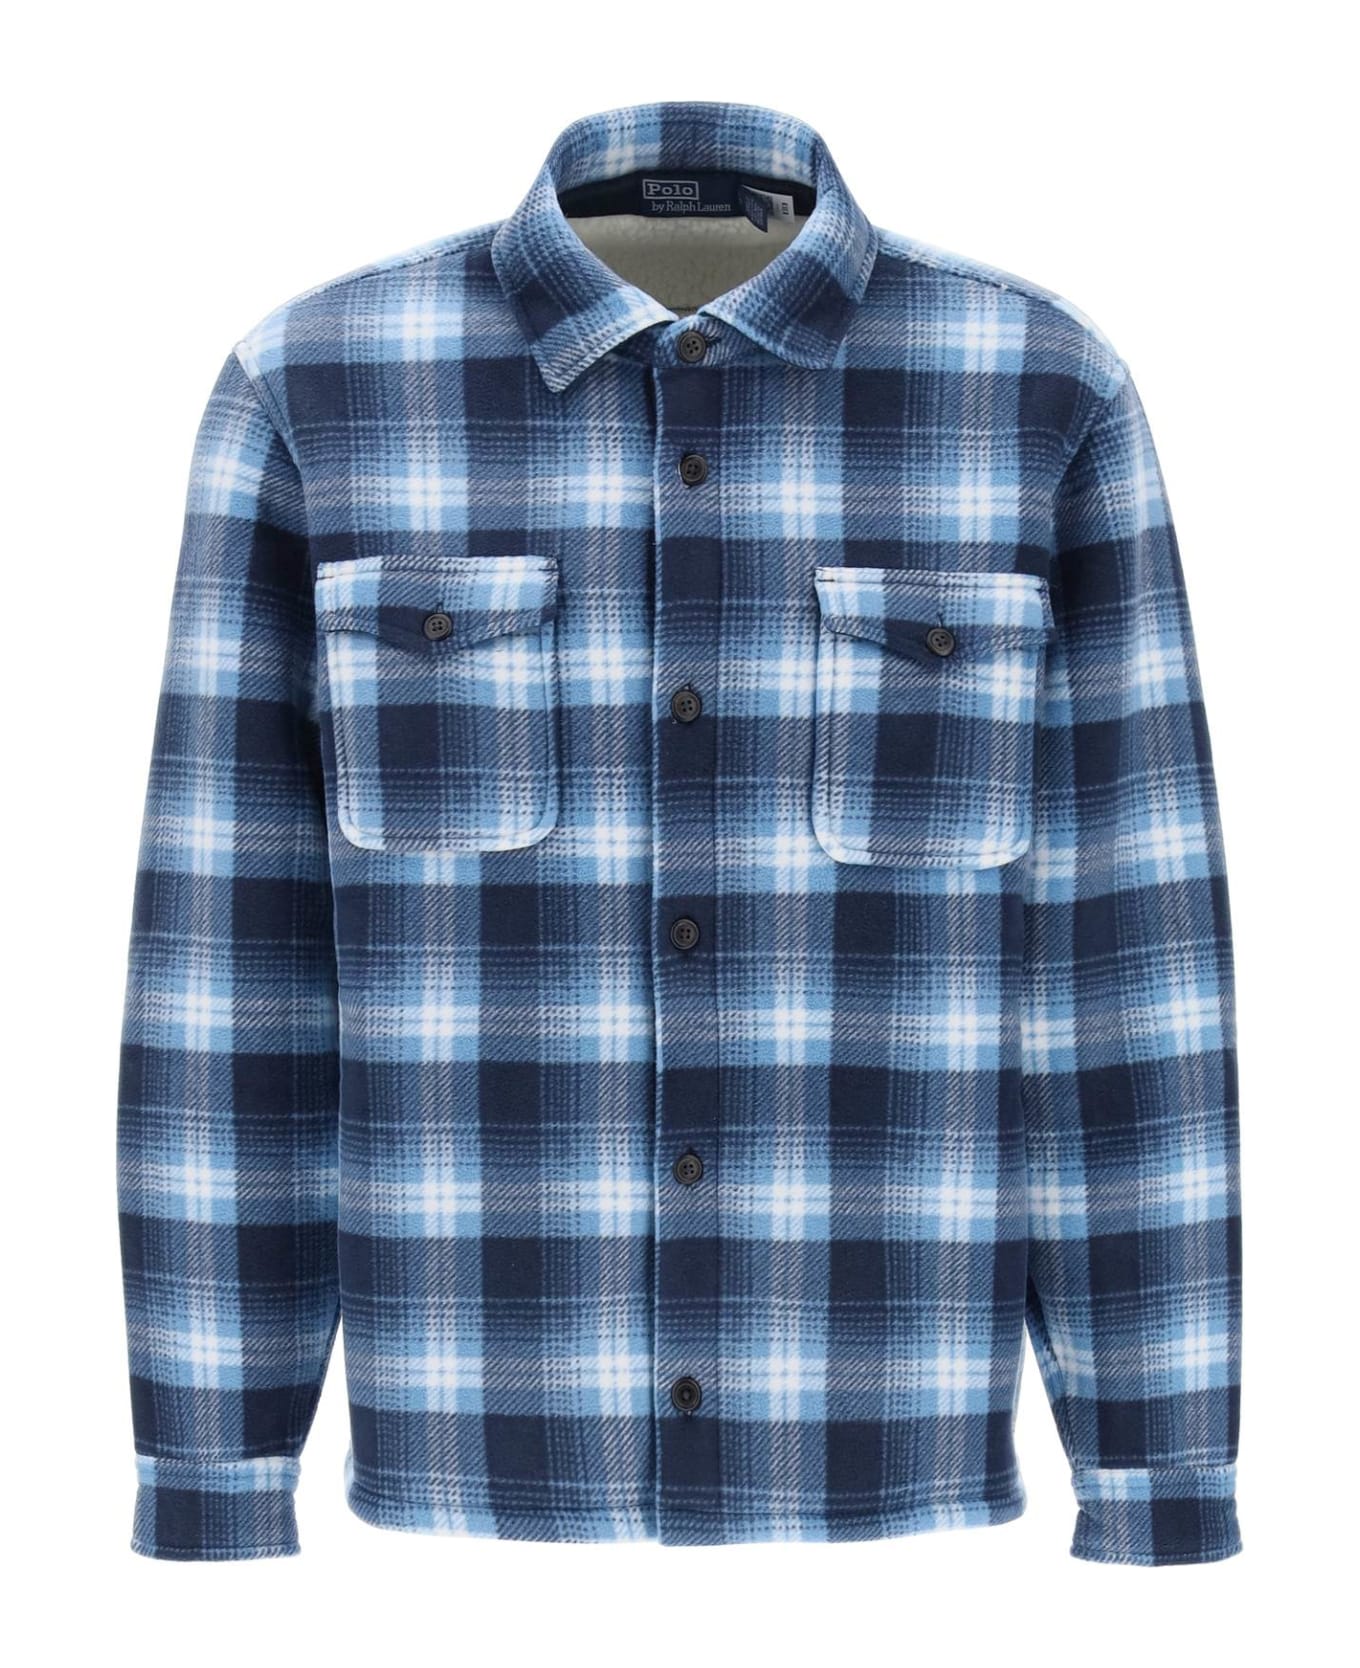 Polo Ralph Lauren Check Shirt Jacket - OUTDOOR OMBRE PLAID (Blue)